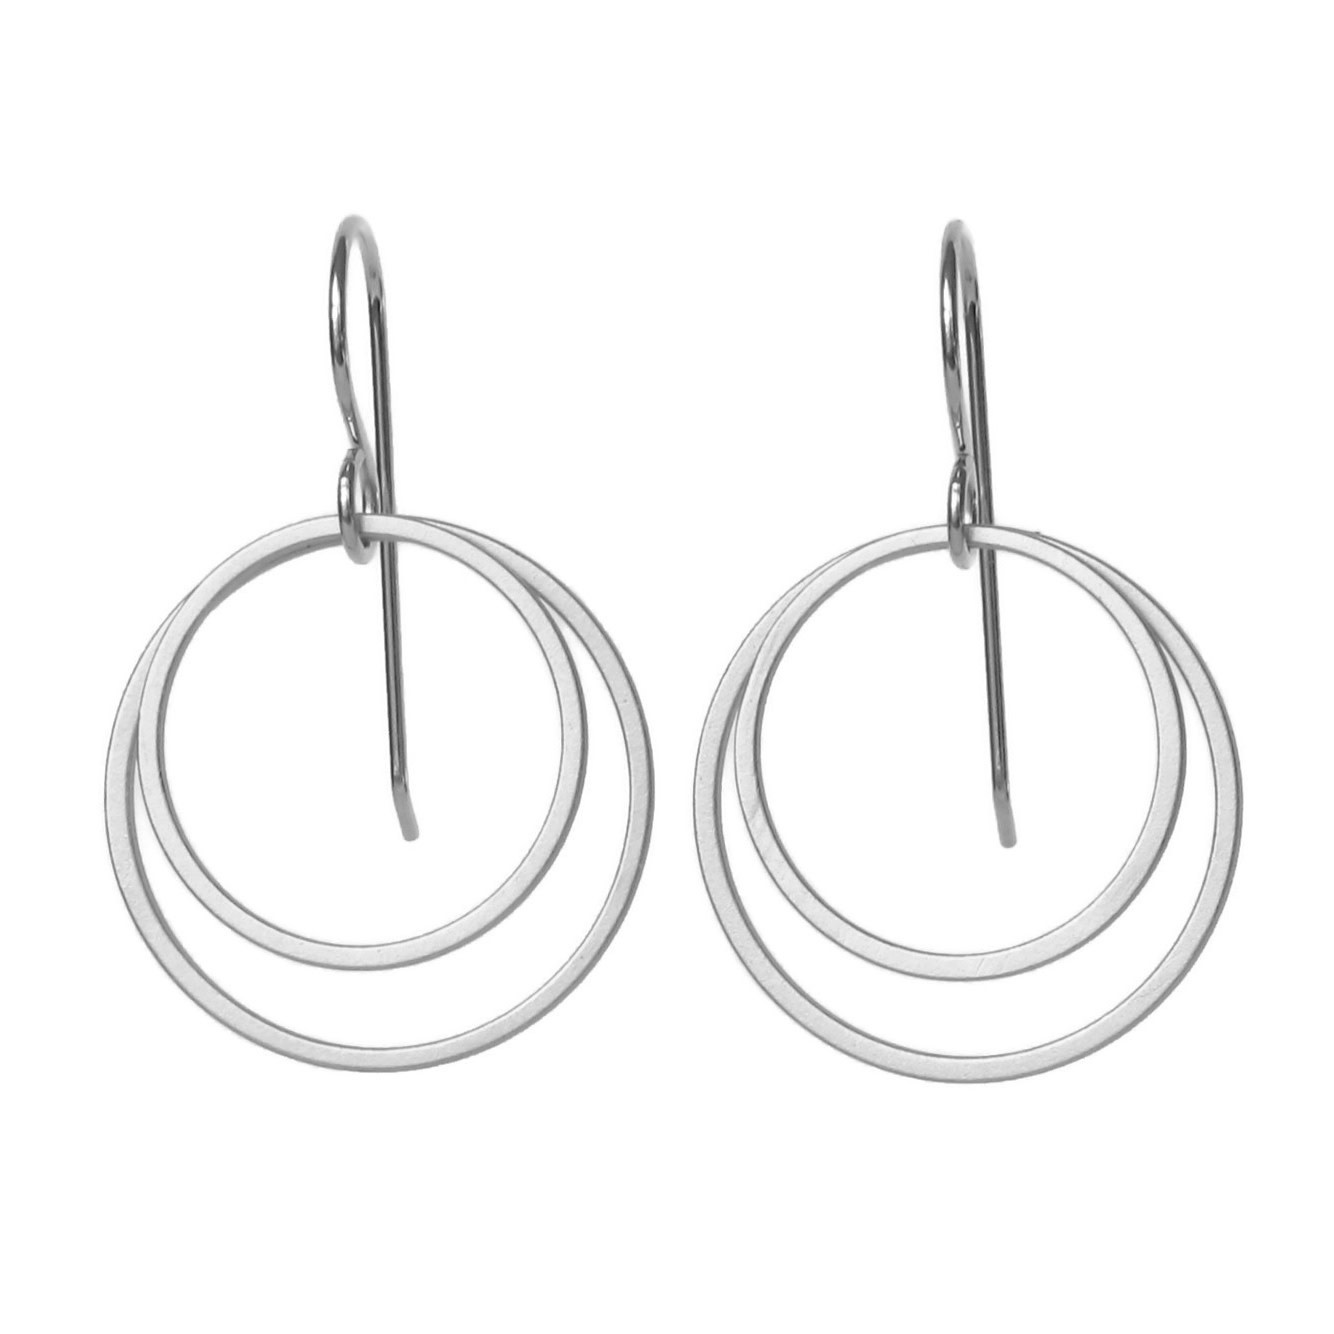 Stowaway Jewelry Double Circle Earrings